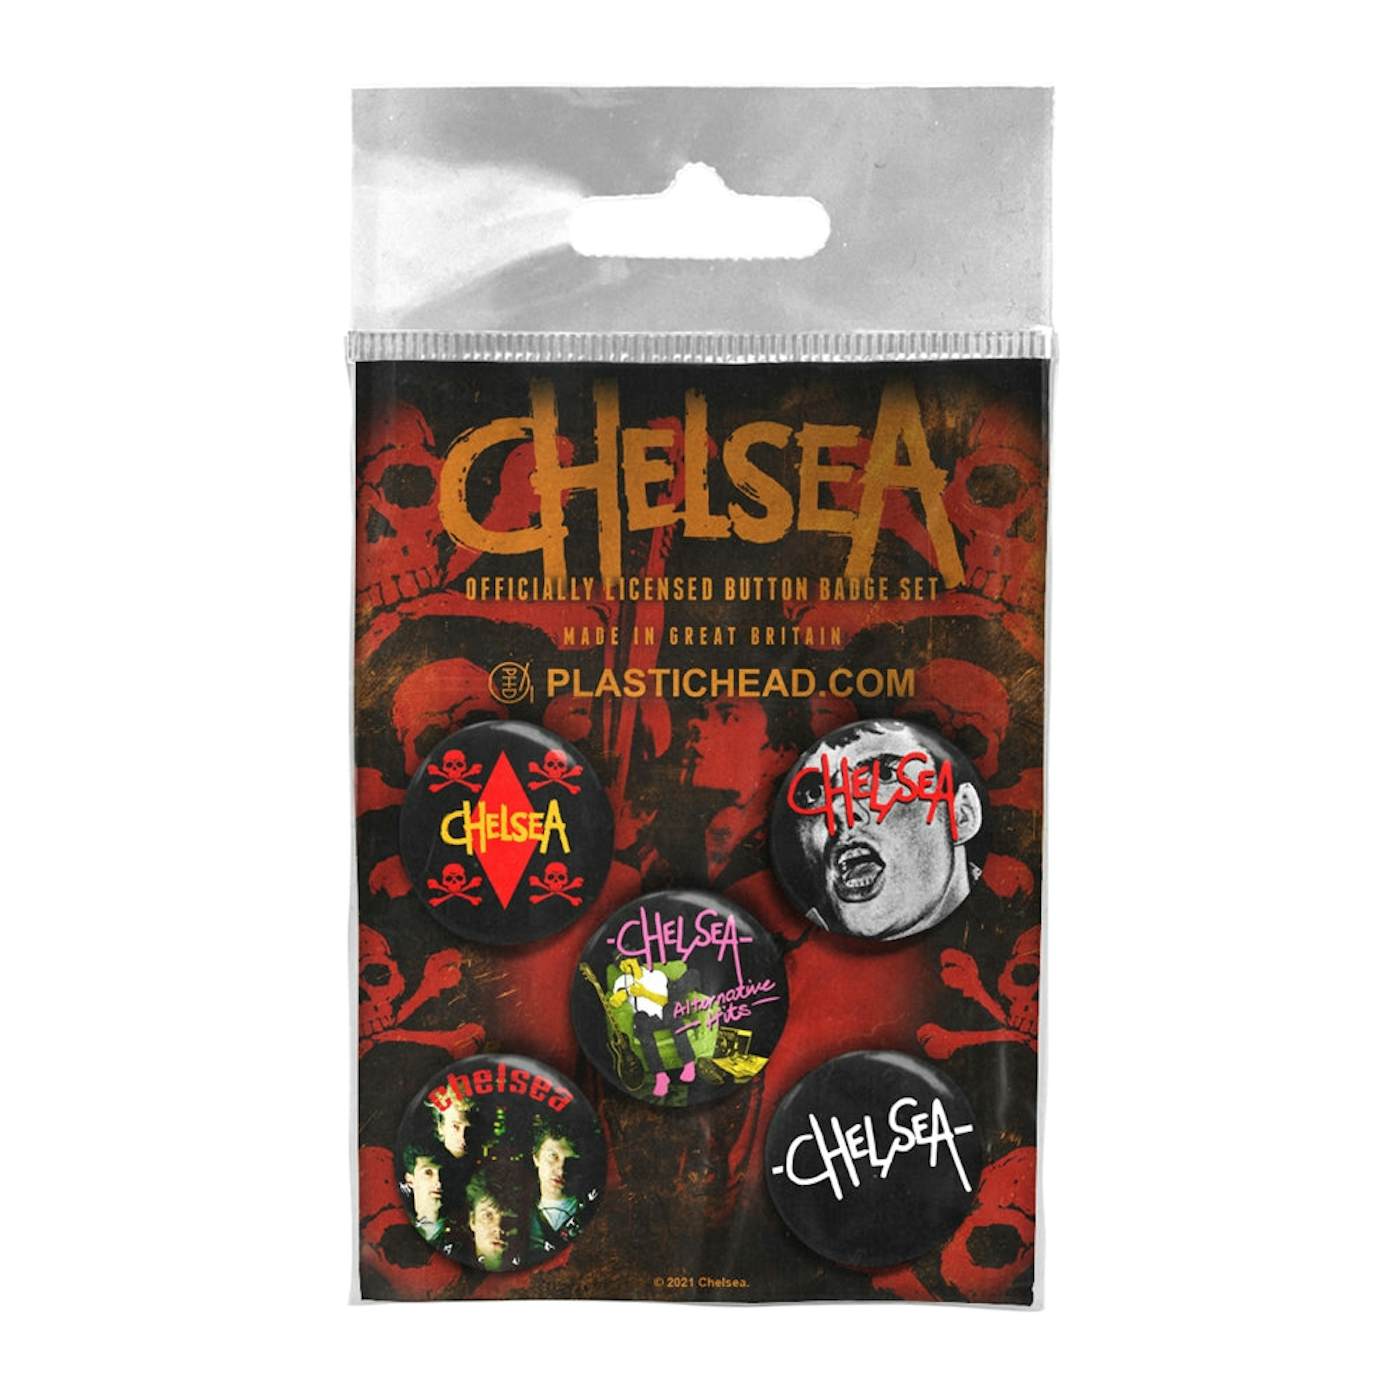 Chelsea Badge Pack - Chelsea Button Badge Set